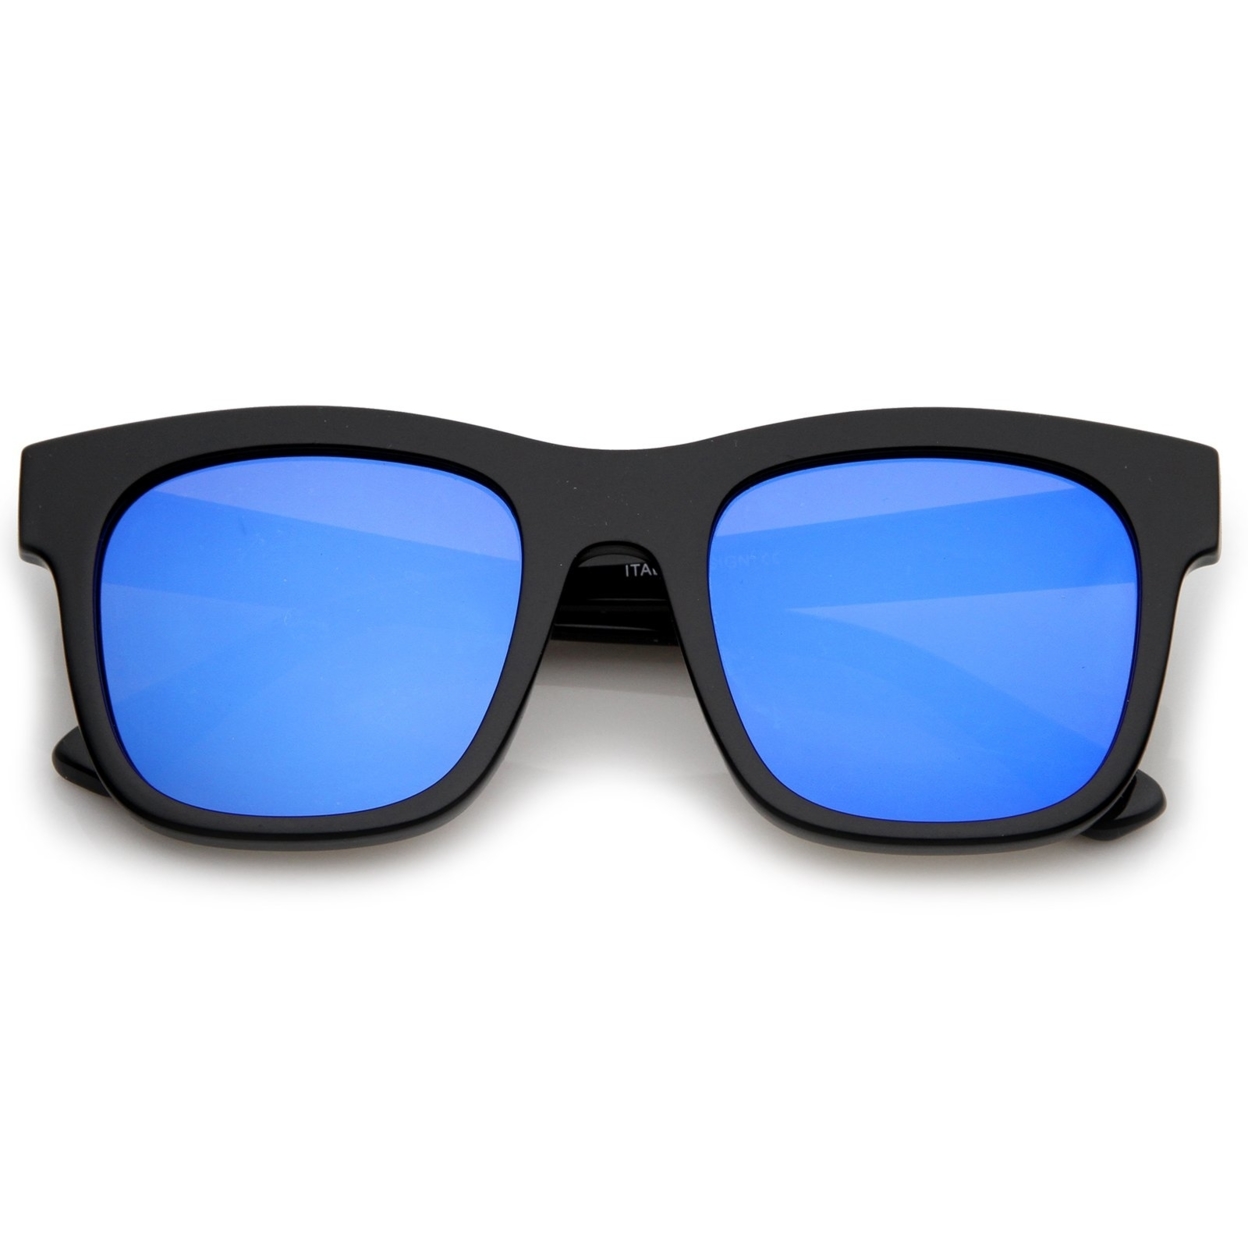 Retro Wide Temple Square Colored Mirror Flat Lens Horn Rimmed Sunglasses 57mm - Black / Blue Mirror